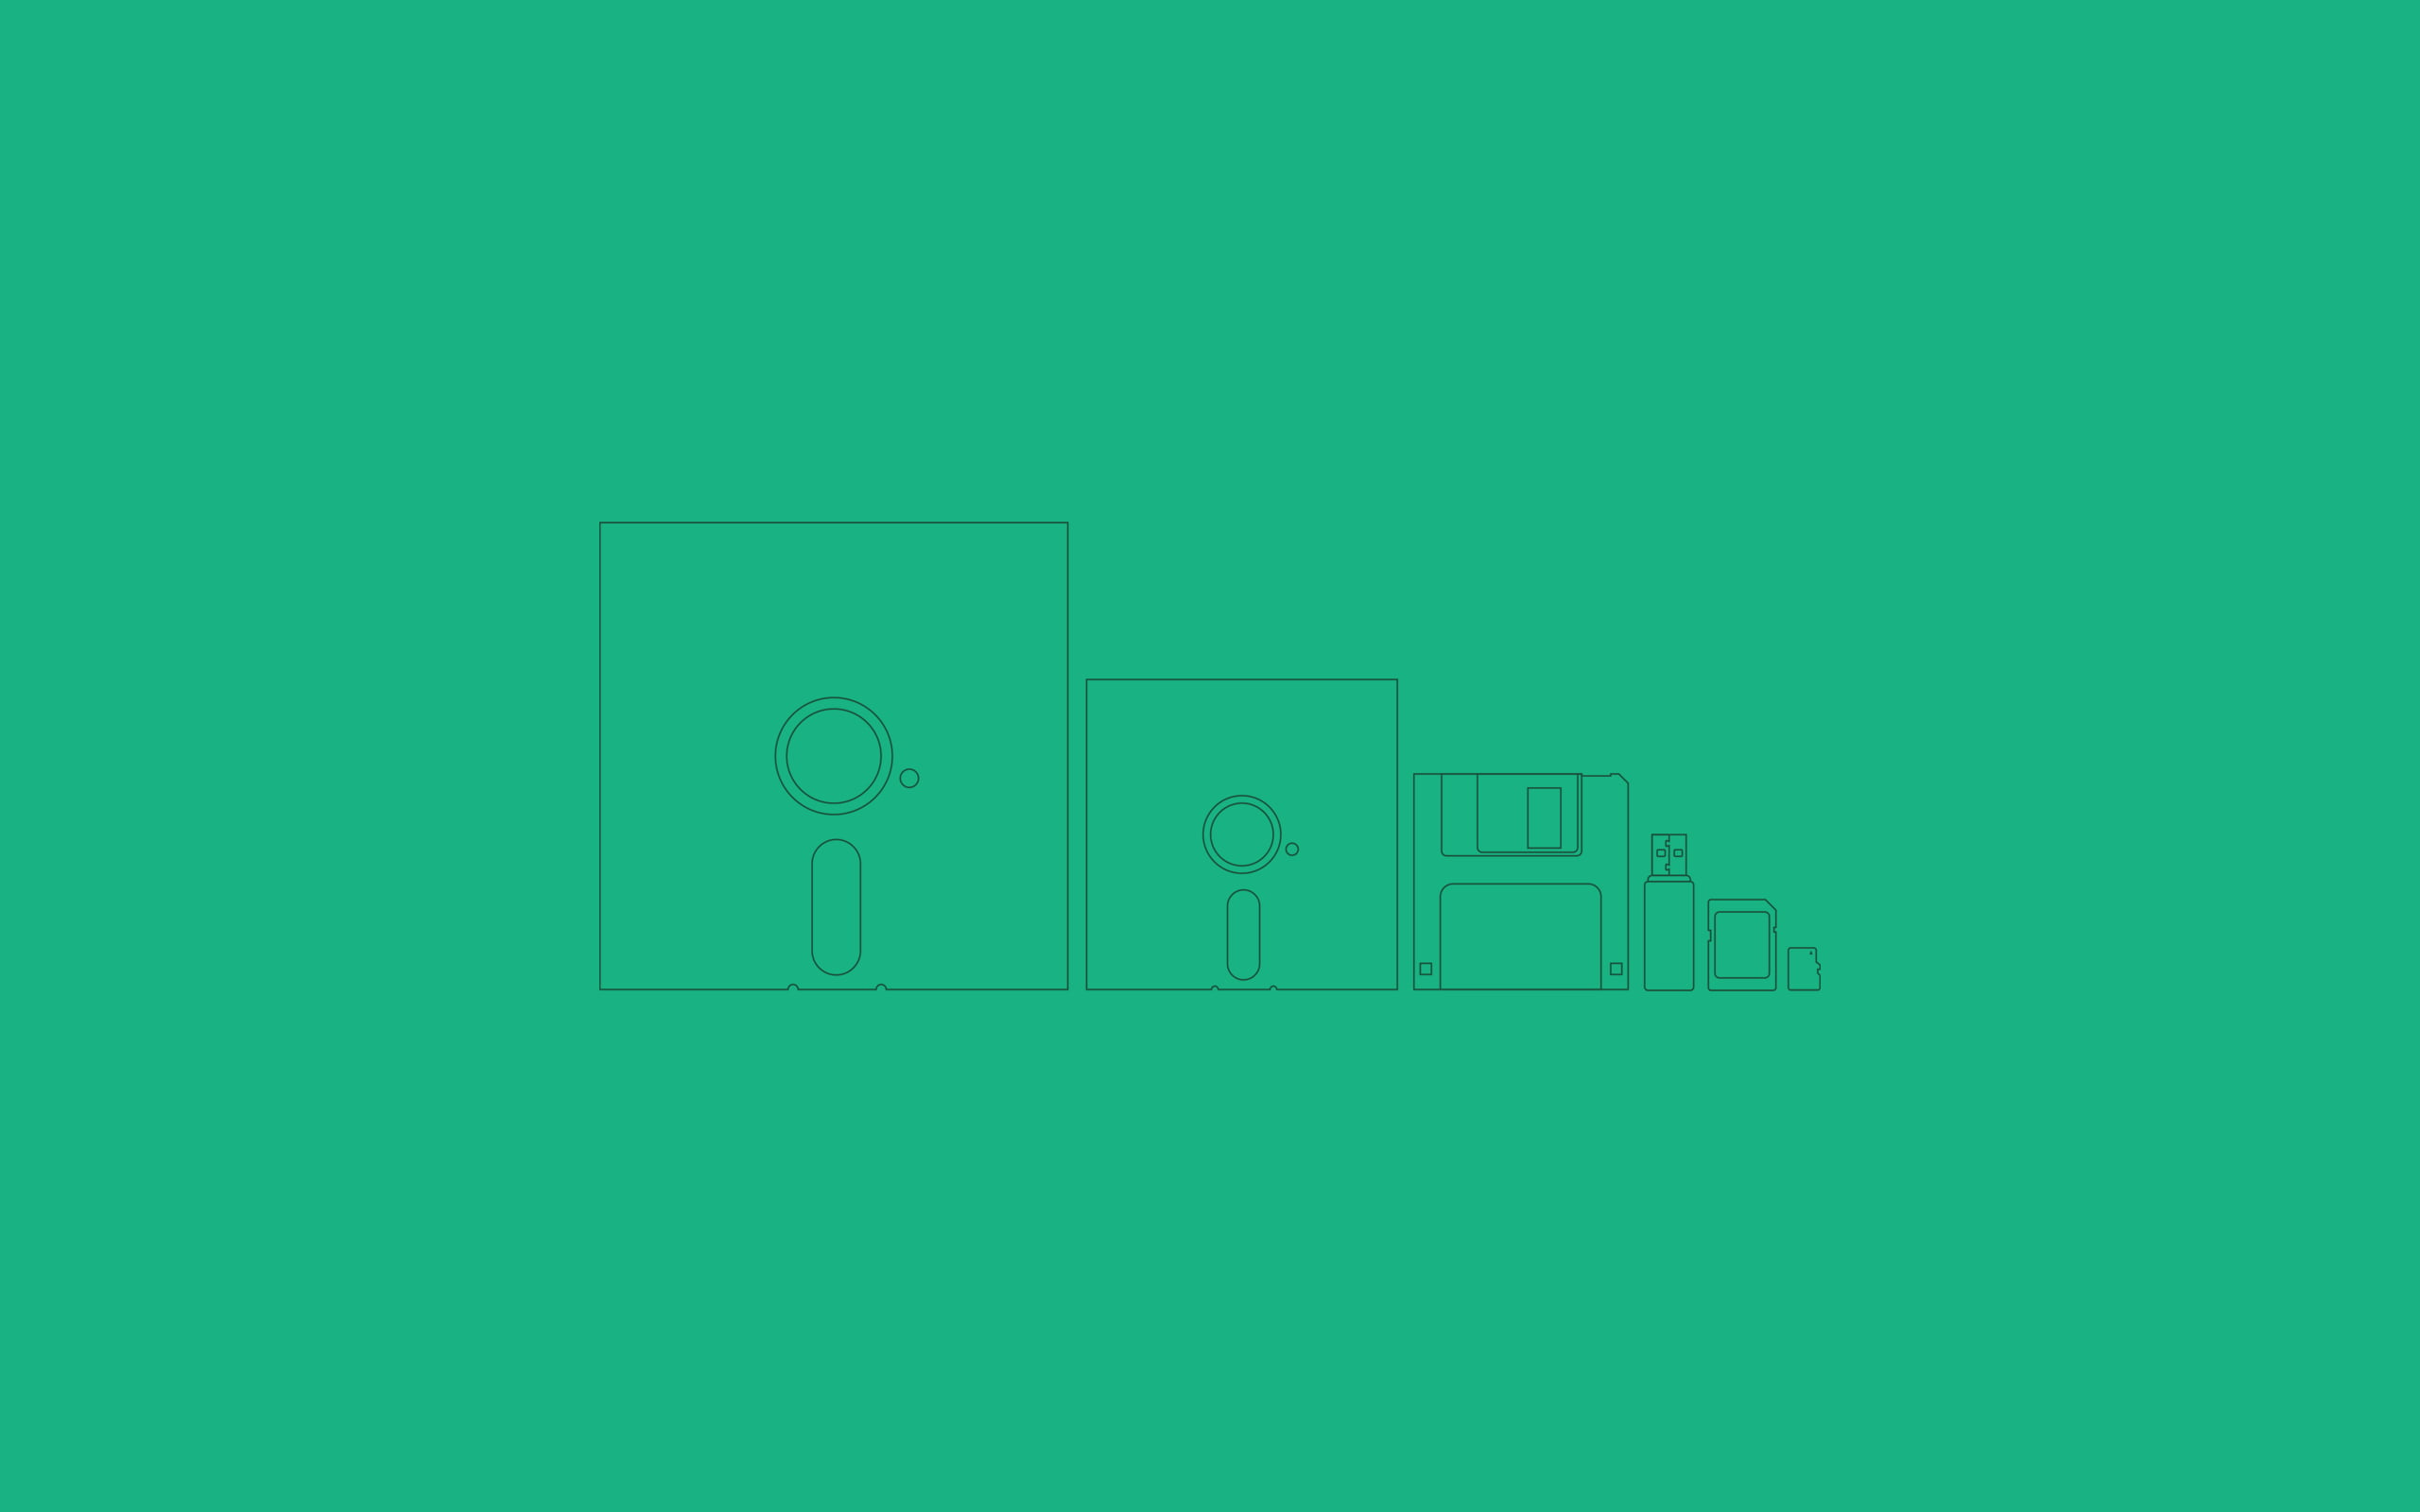 floppy disk illustration, minimalism, artwork, computer, green